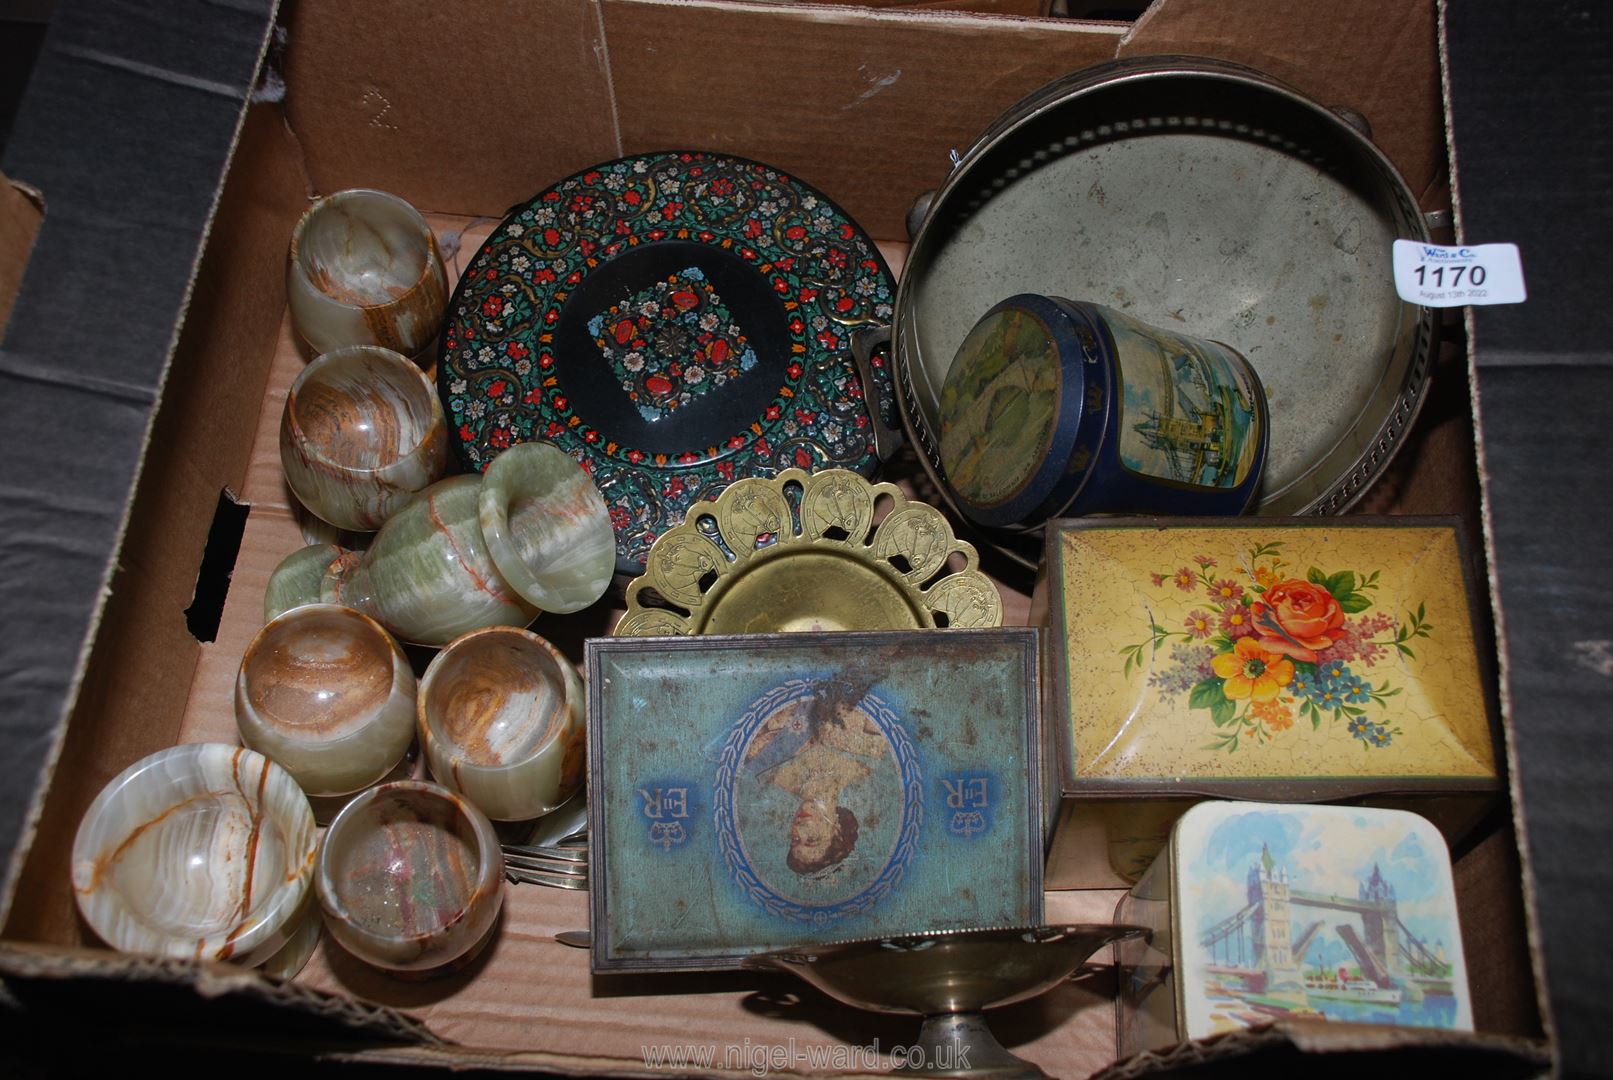 A quantity of miscellanea including vintage tins, W.D. & H.G.